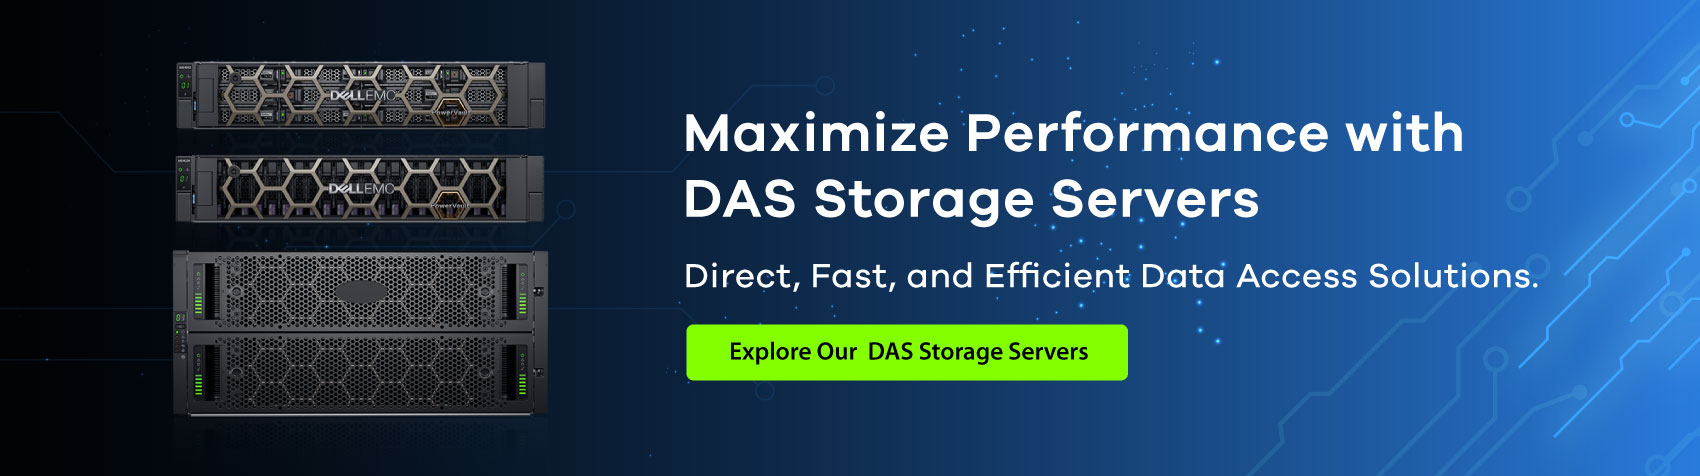 DAS-Storage-Servers